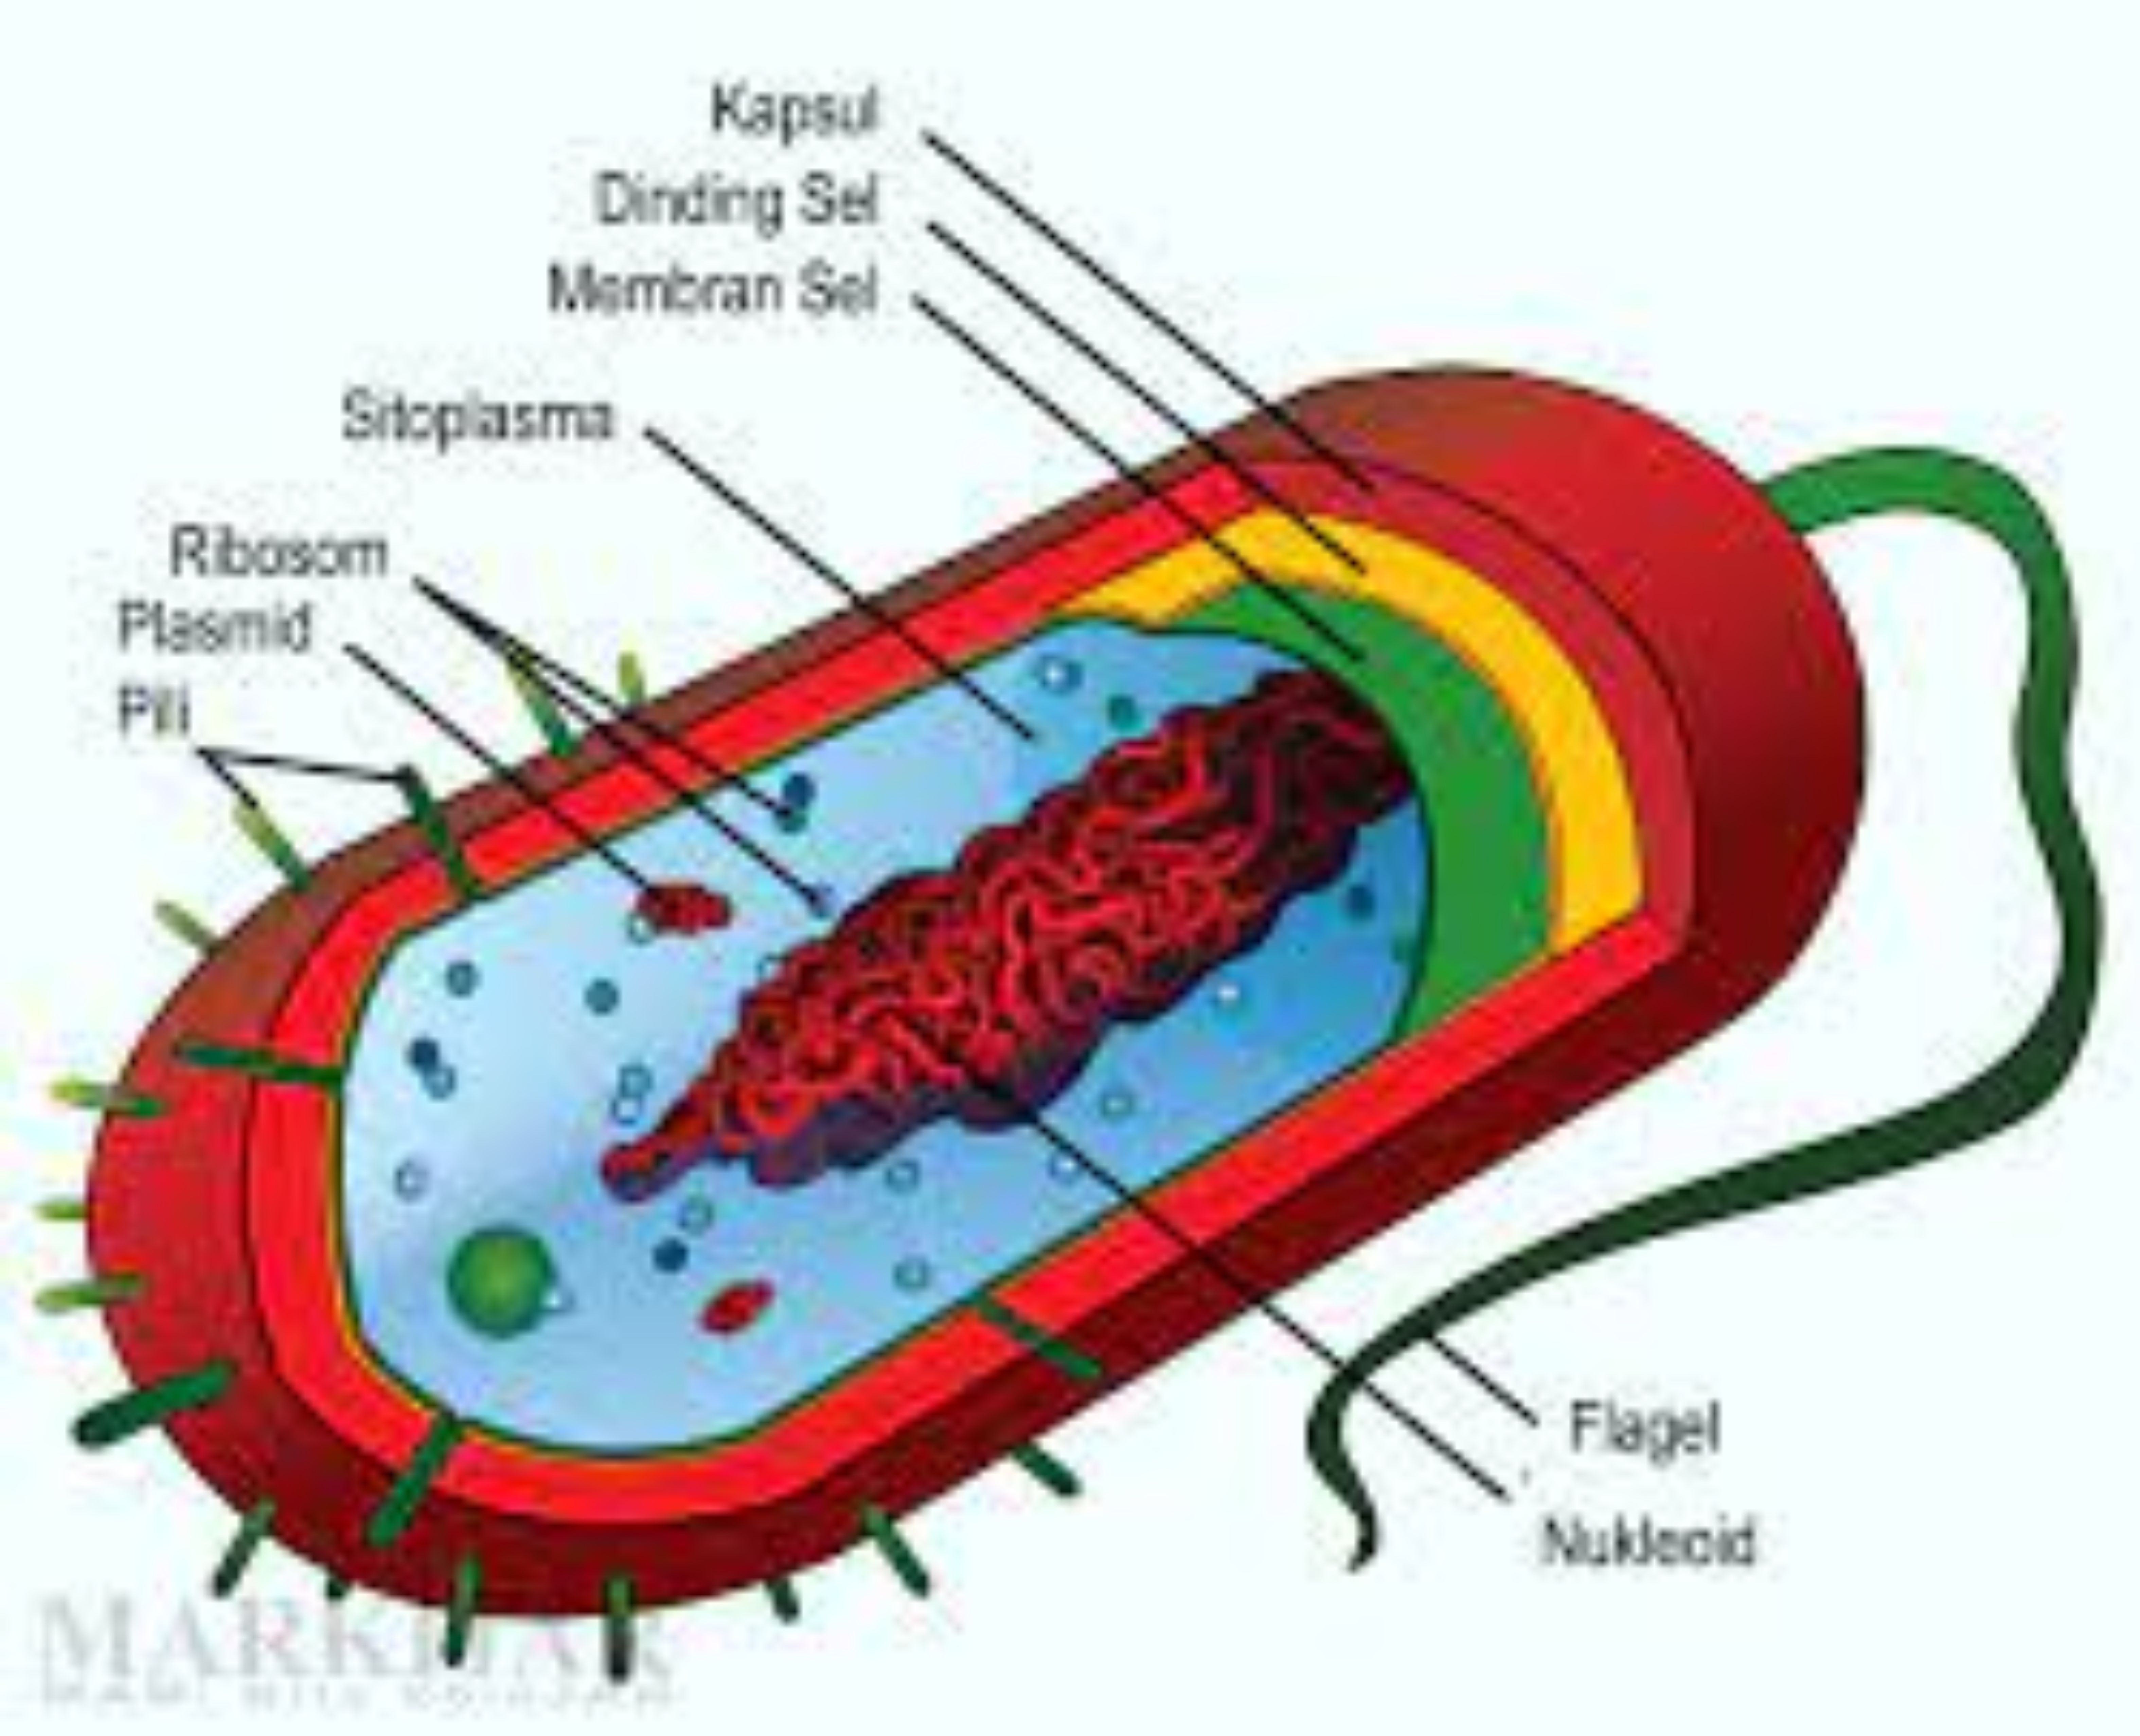 Kingdom Eubacteria